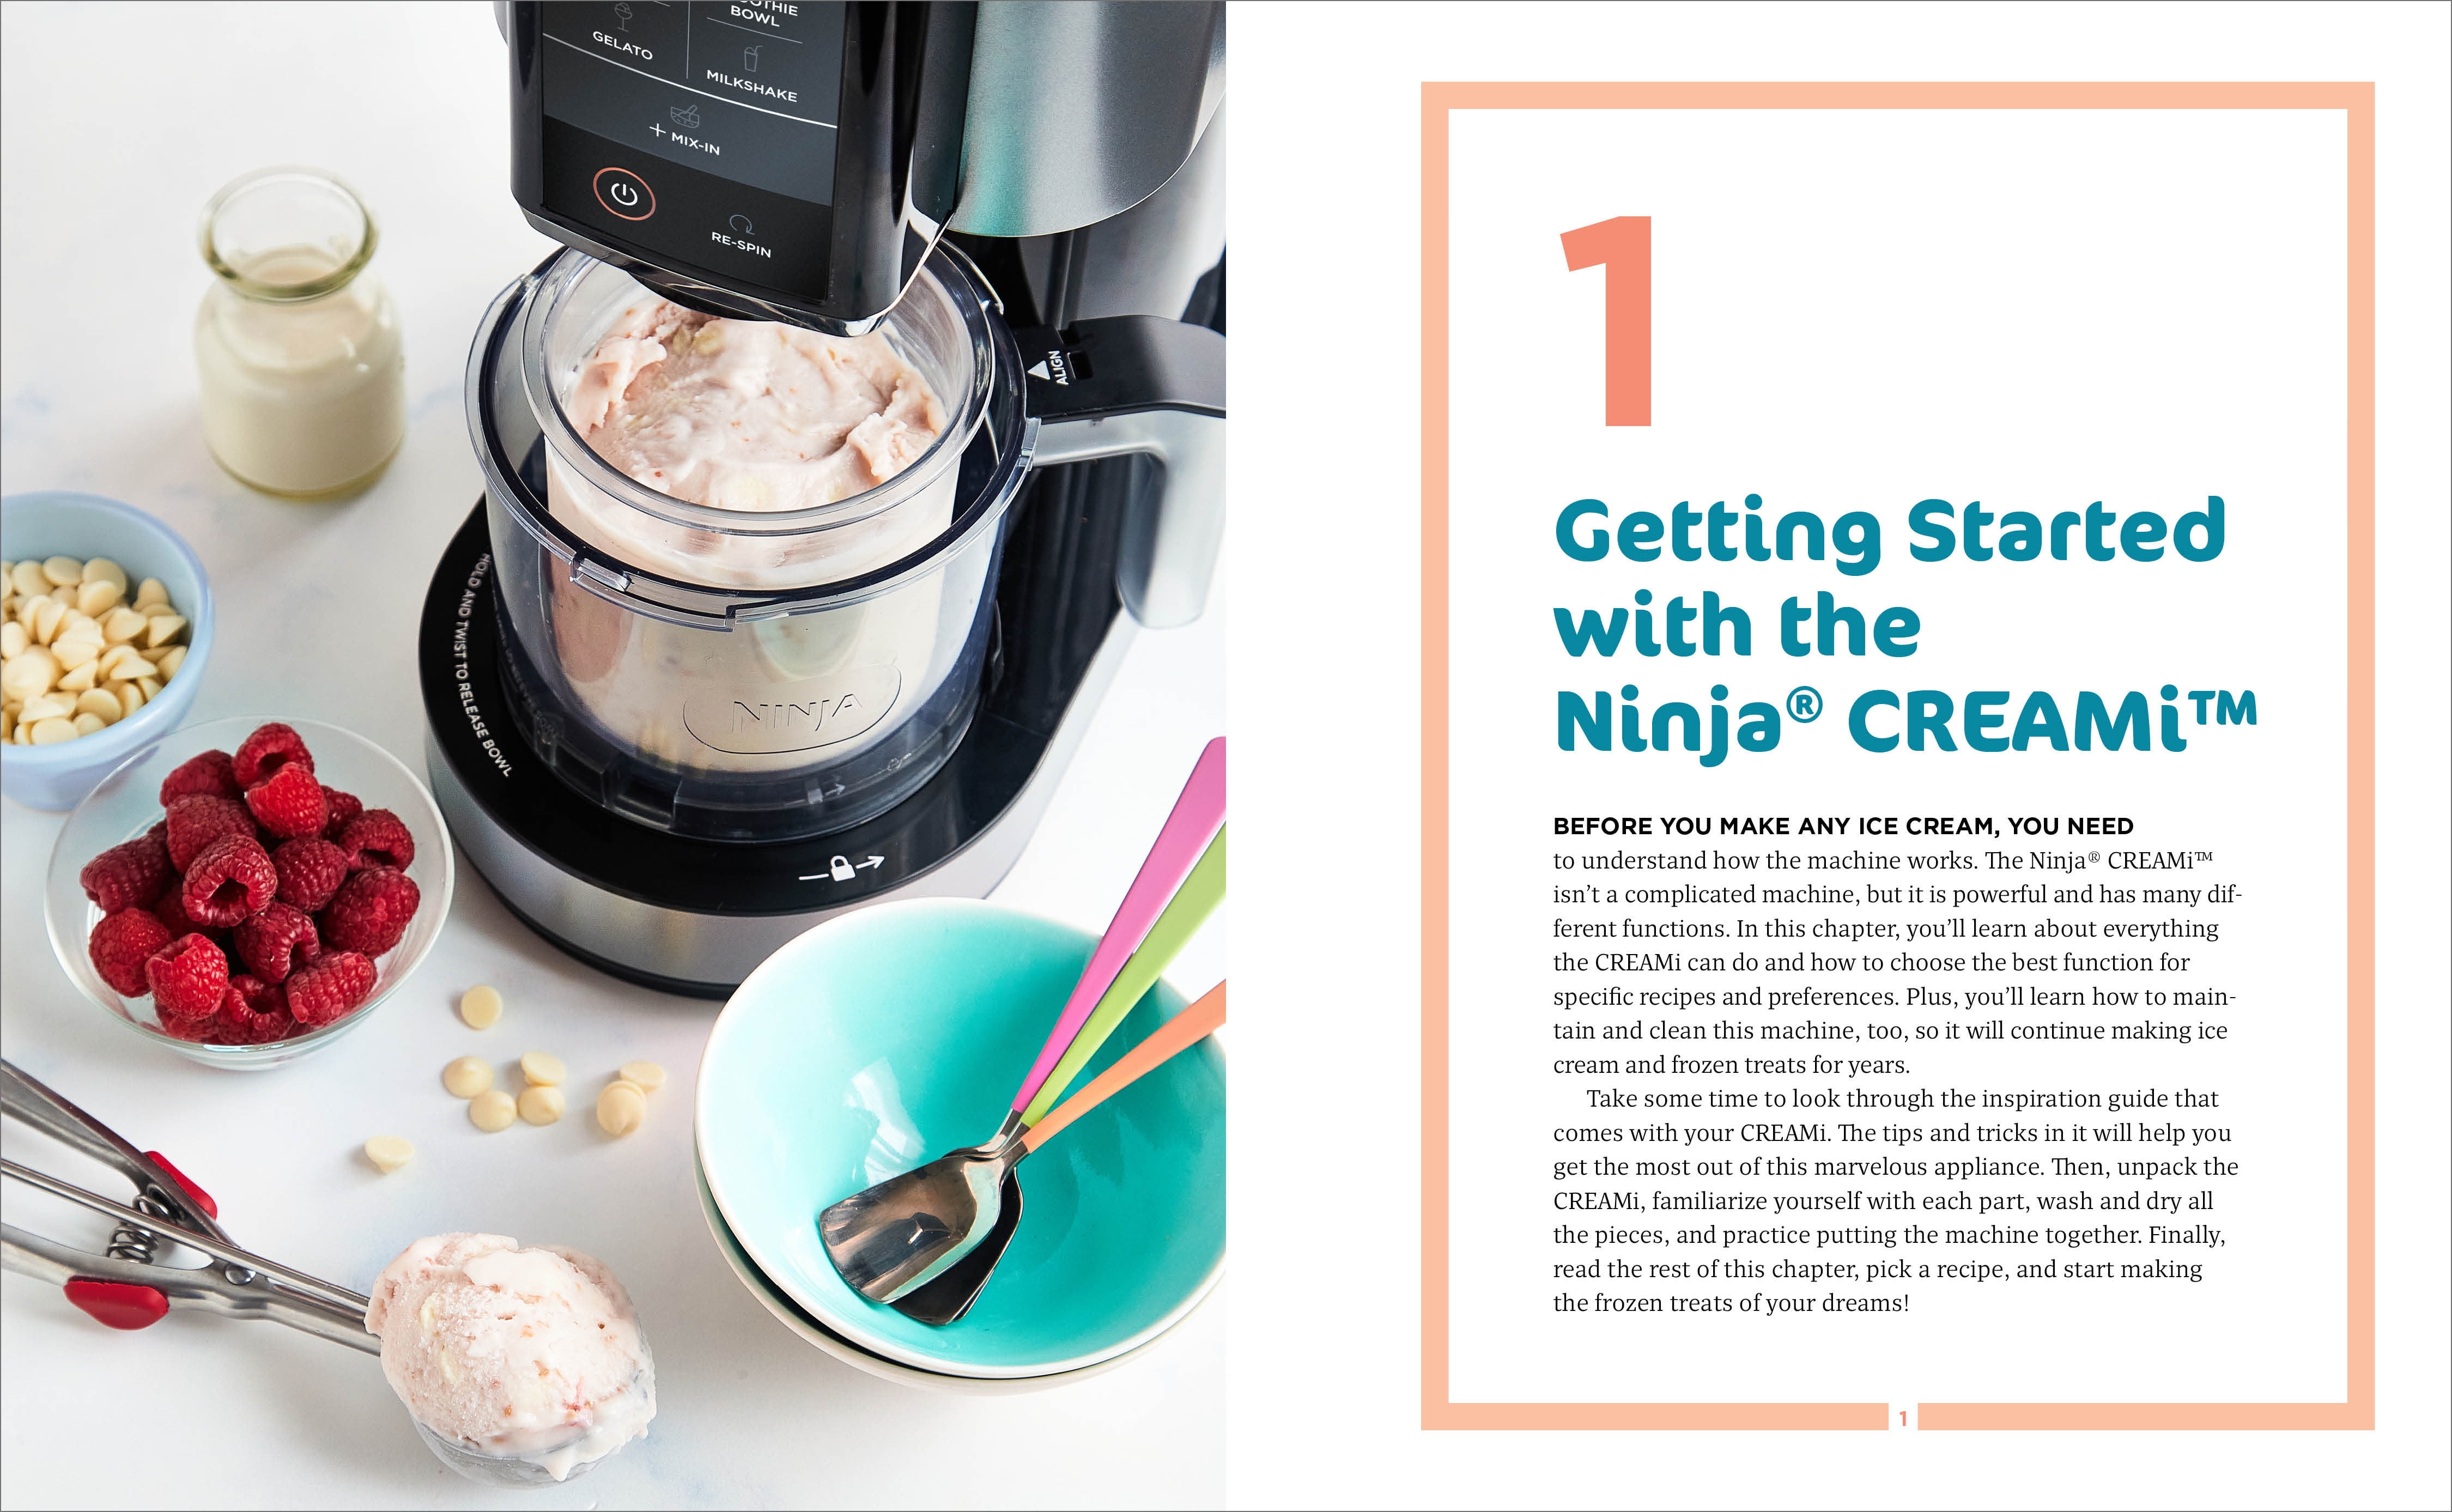 2023 Ninja Creami Deluxe Cookbook for Beginners: 2000+ Days Easy